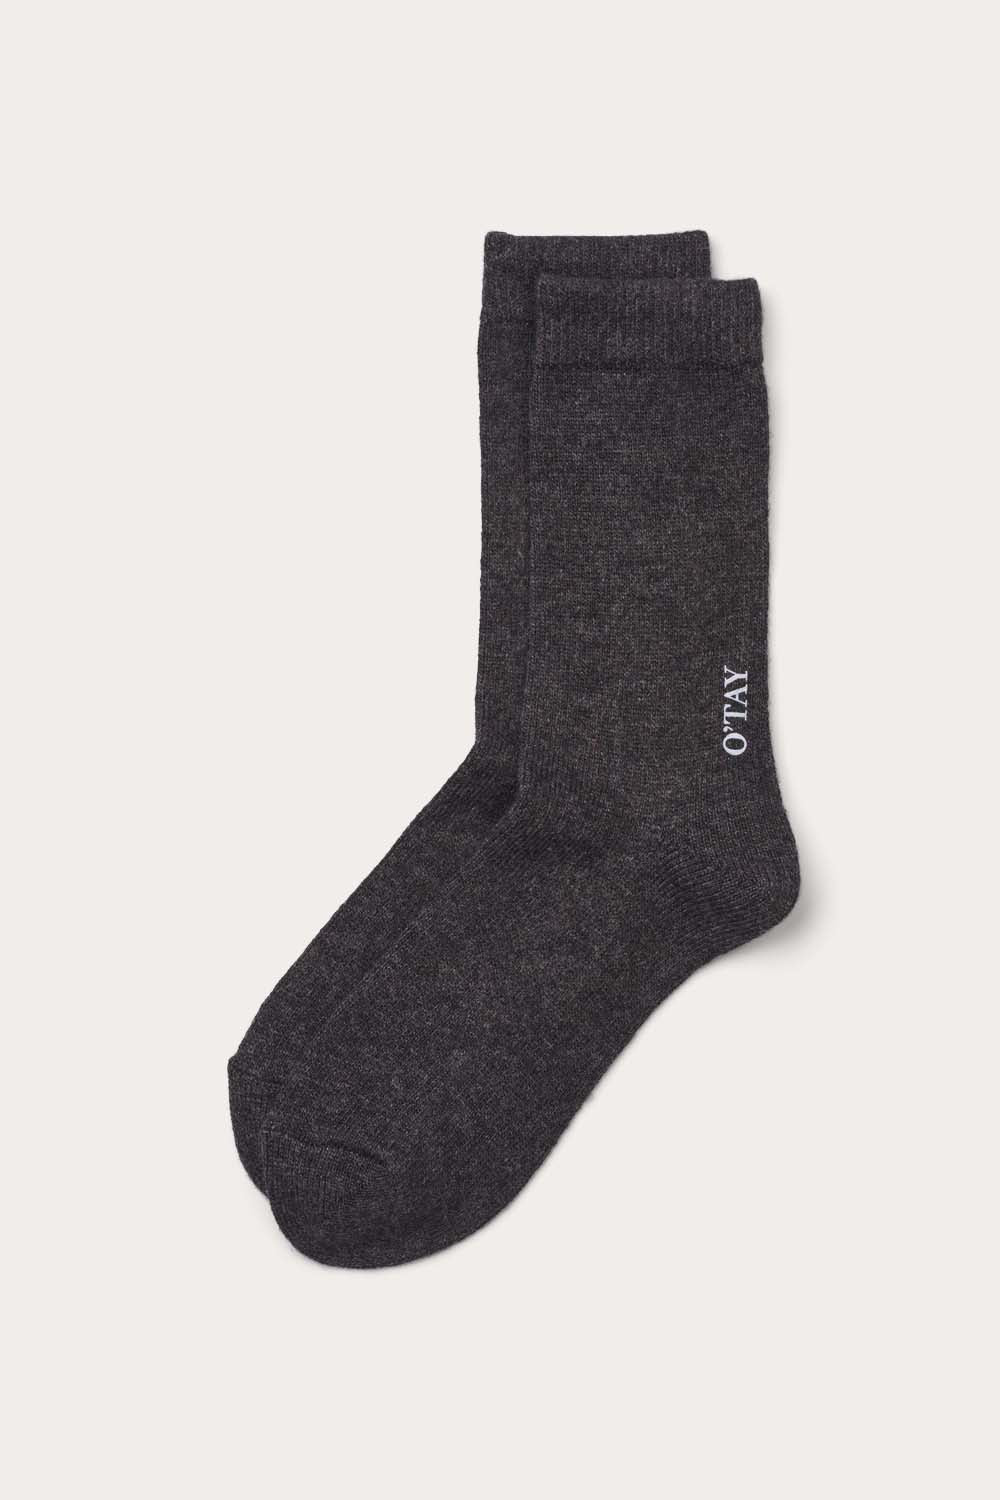 O'TAY Socks Blend Accessories Charcoal